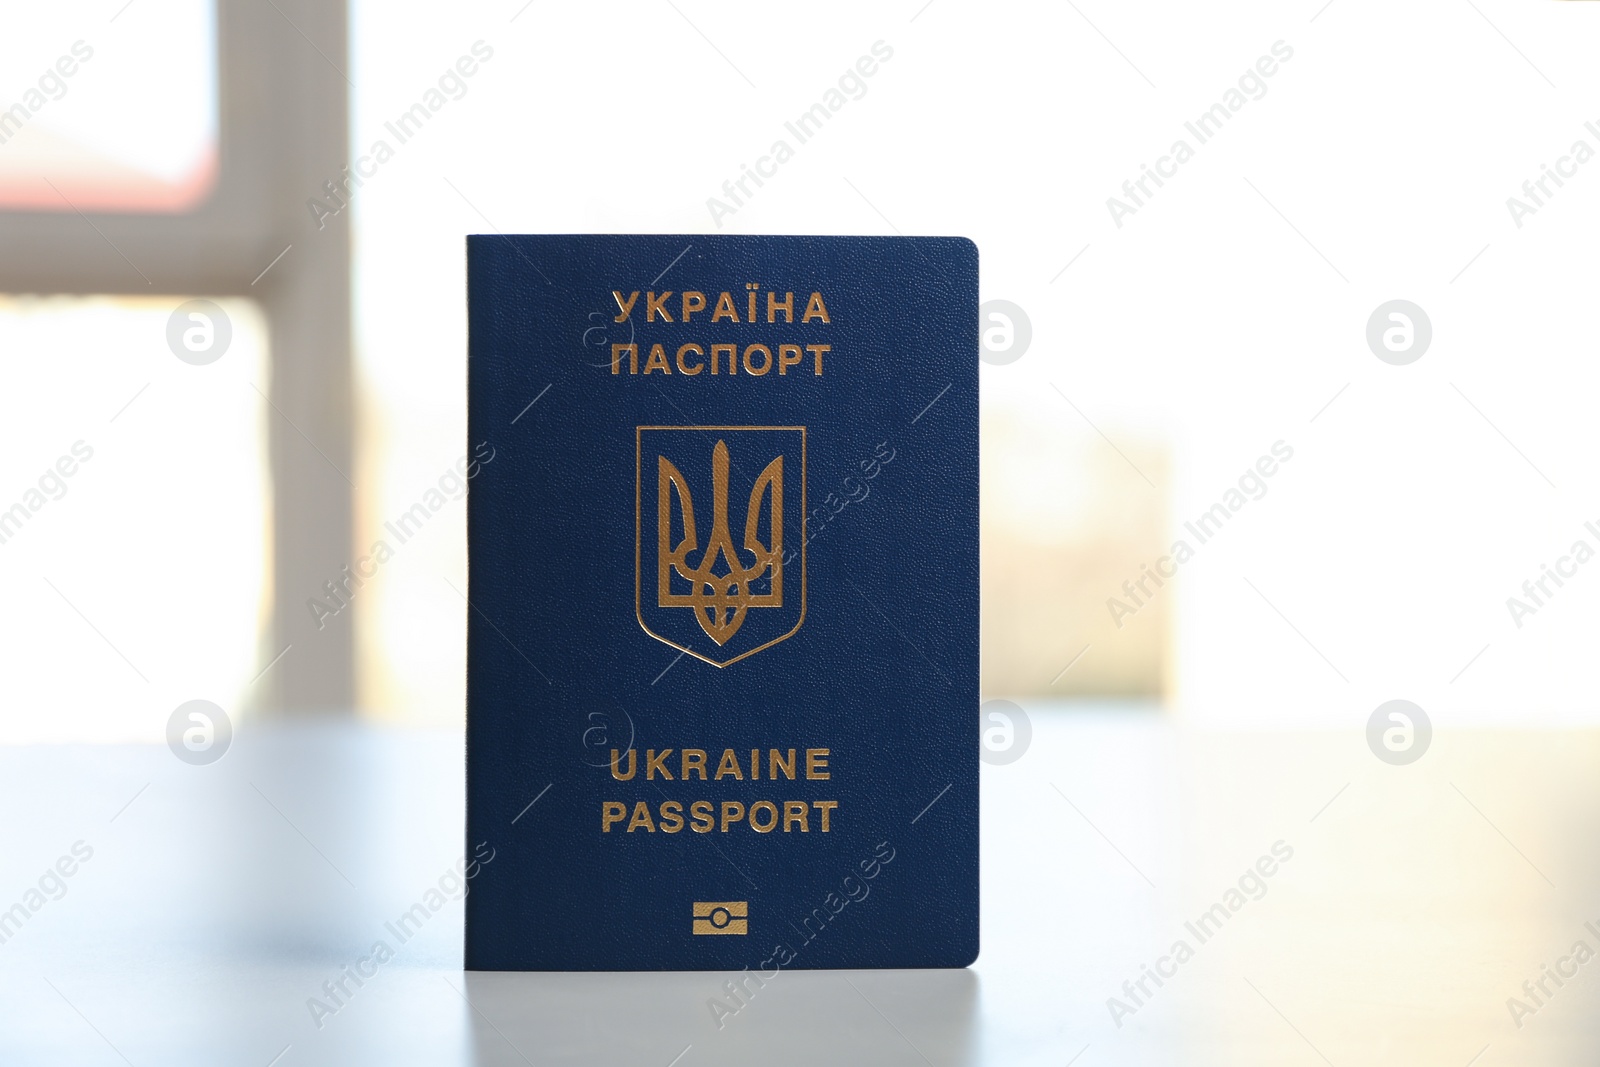 Photo of Ukrainian travel passport on table against blurred background. International relationships